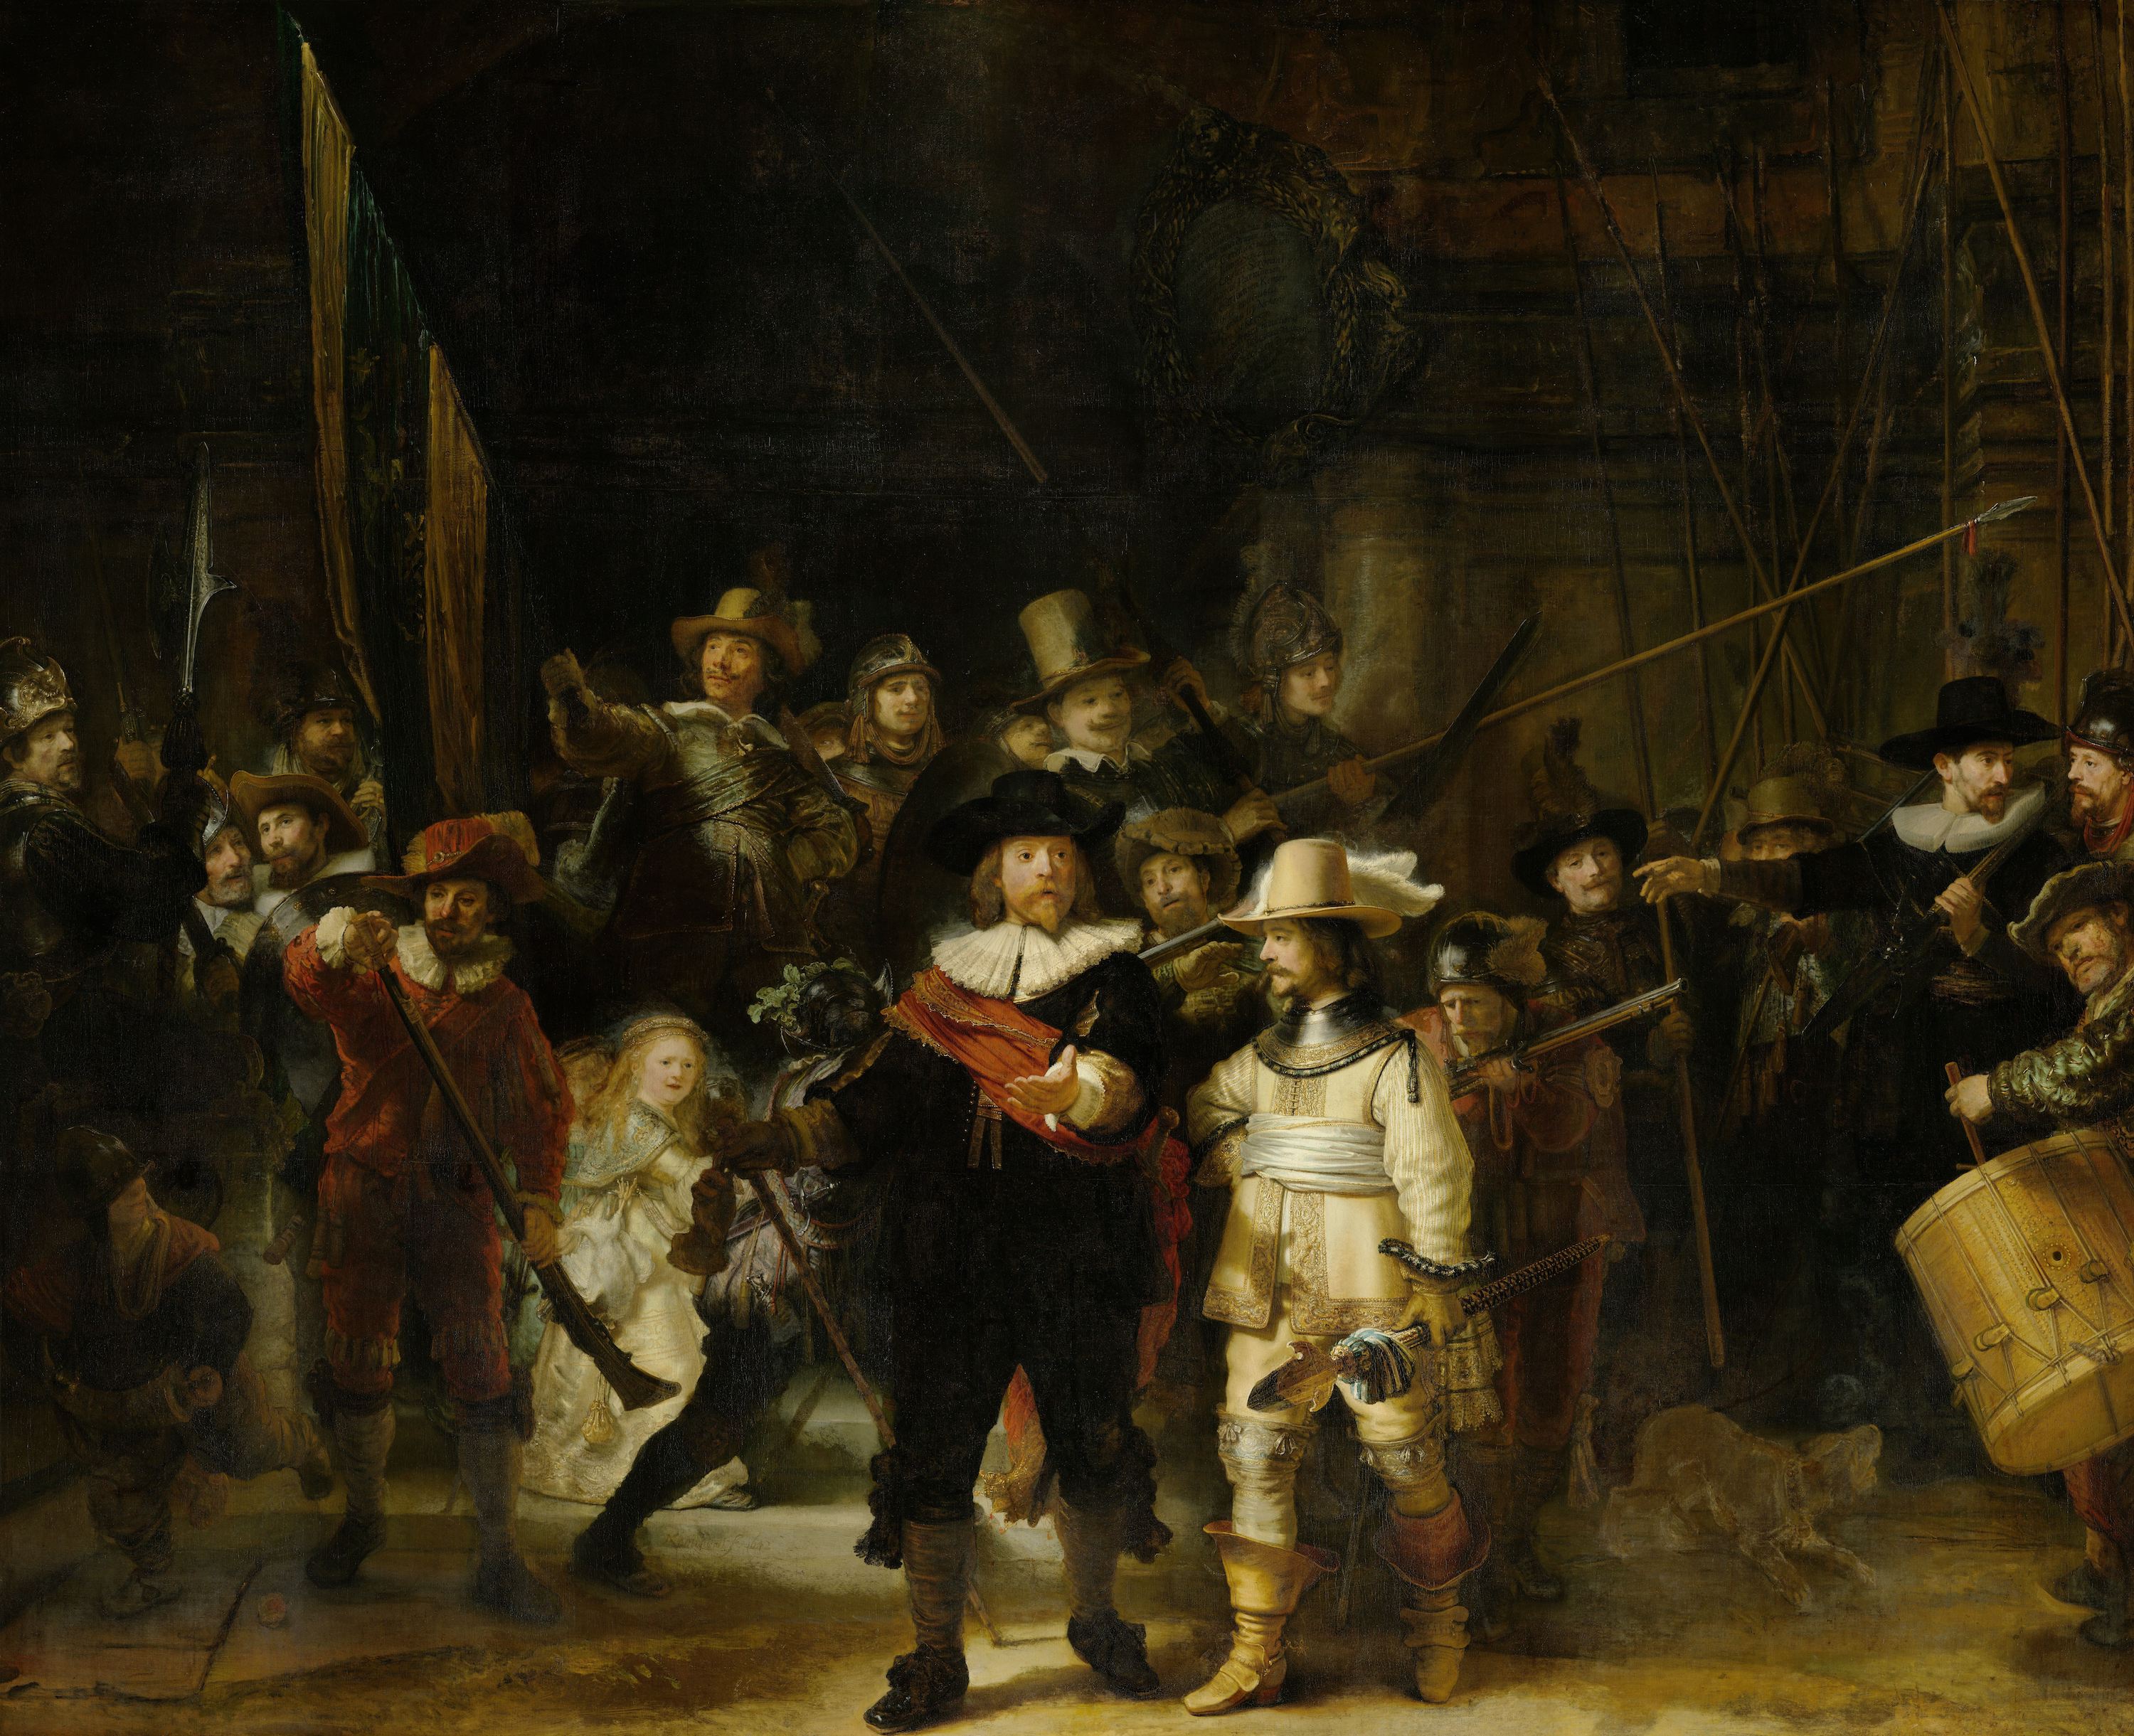 La veglia notturna by Rembrandt van Rijn - 1642 - 363 x 437 cm 